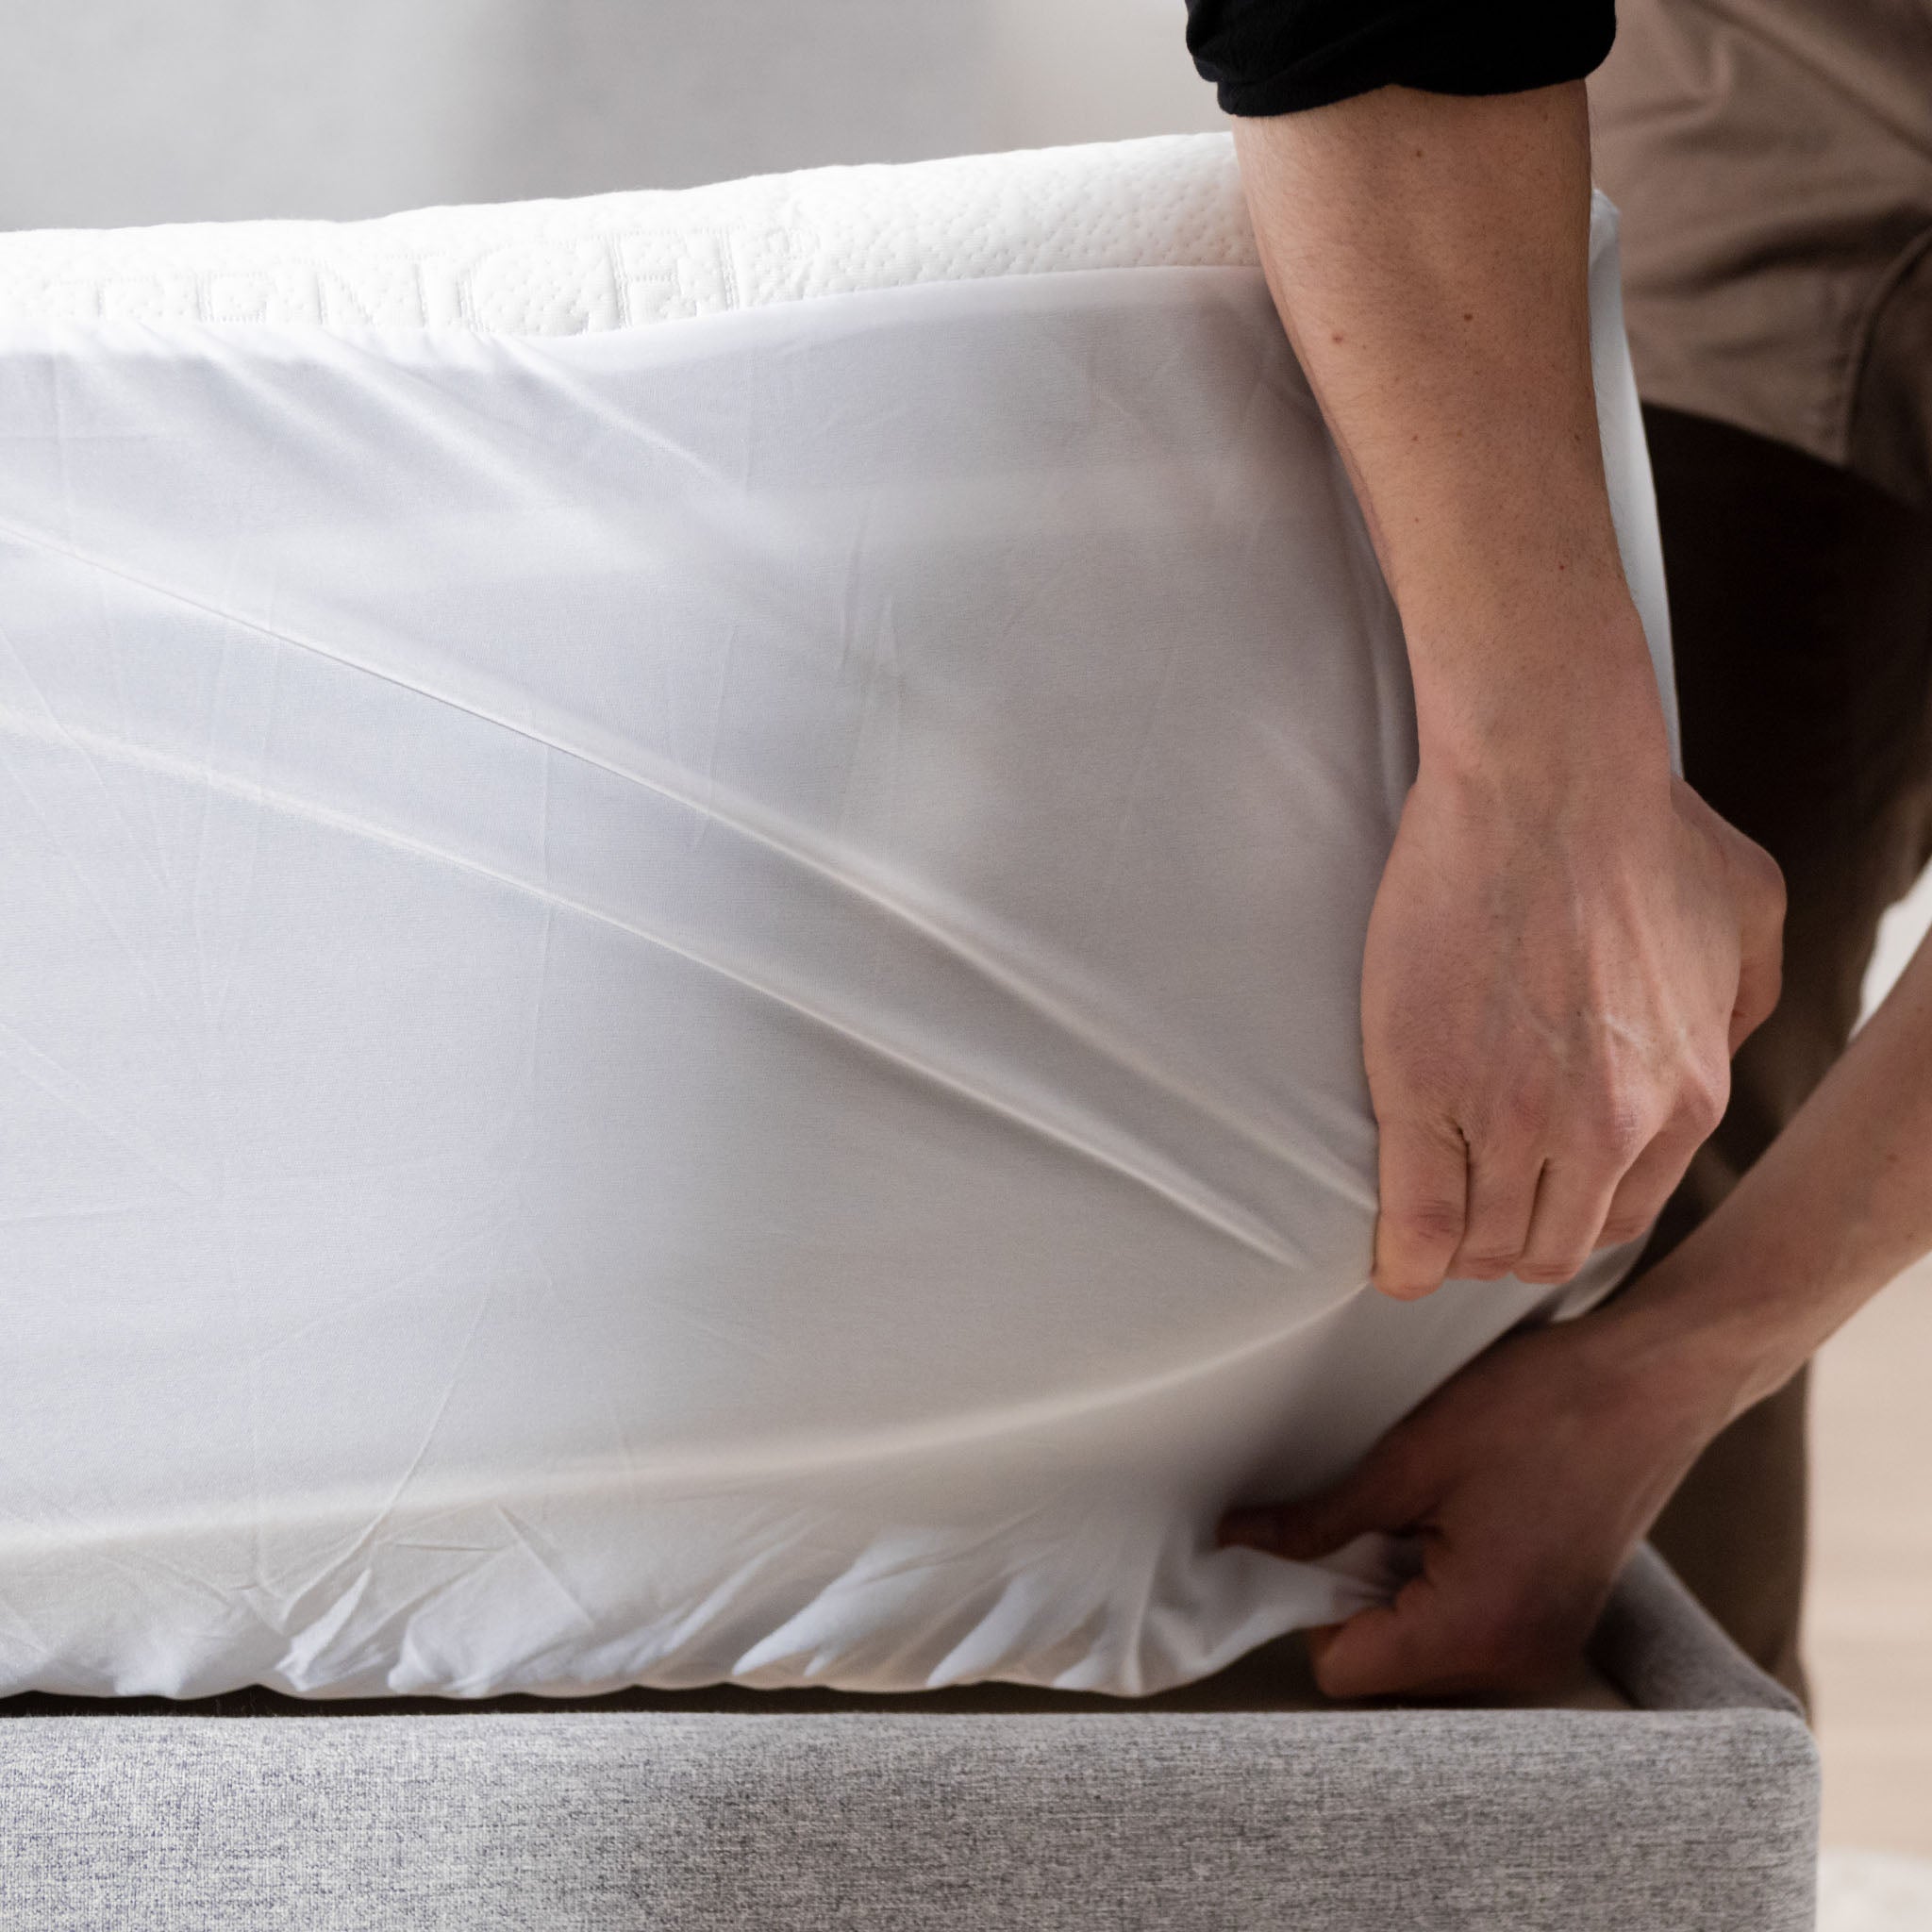 100% waterproof mattress protector full size